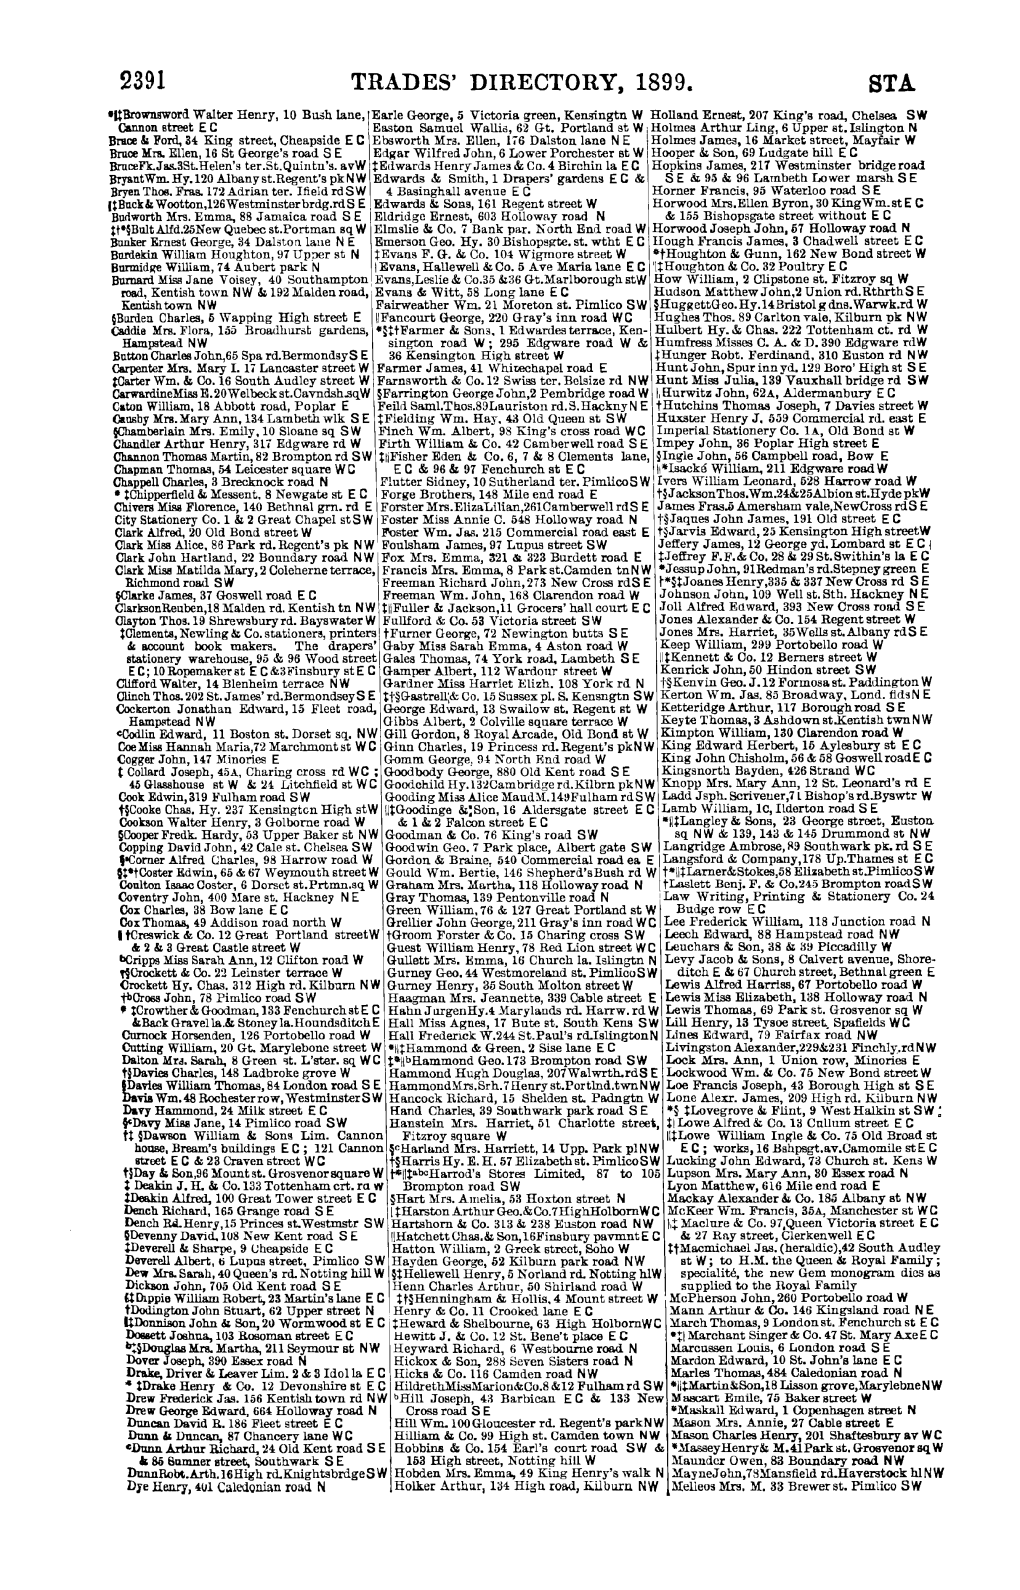 Trades' Directory, 1899